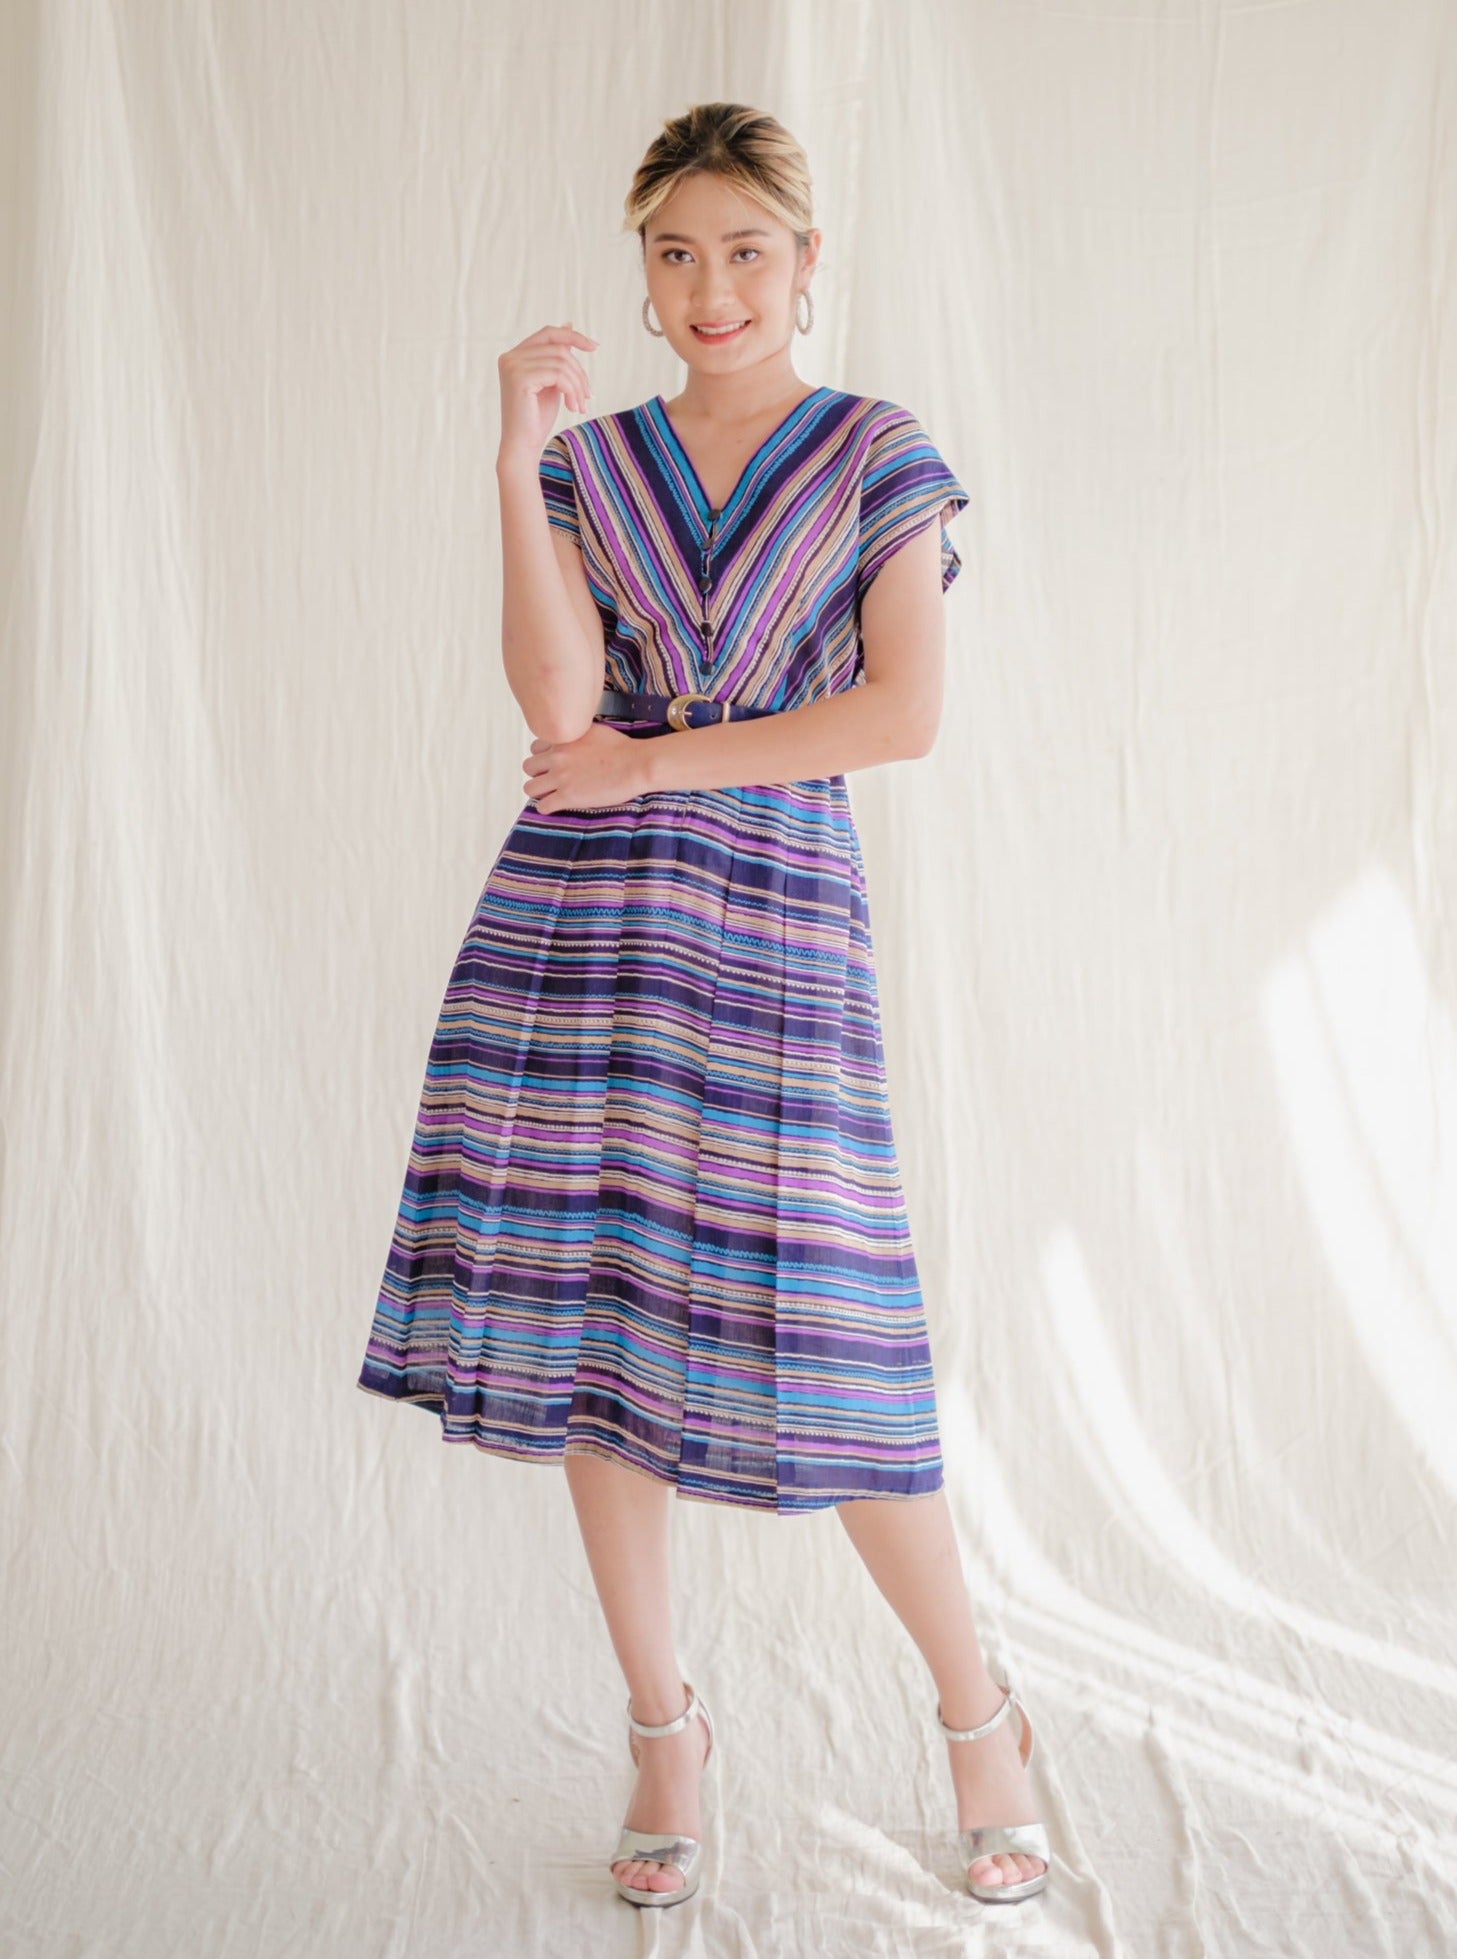 Colourful striped vintage dress